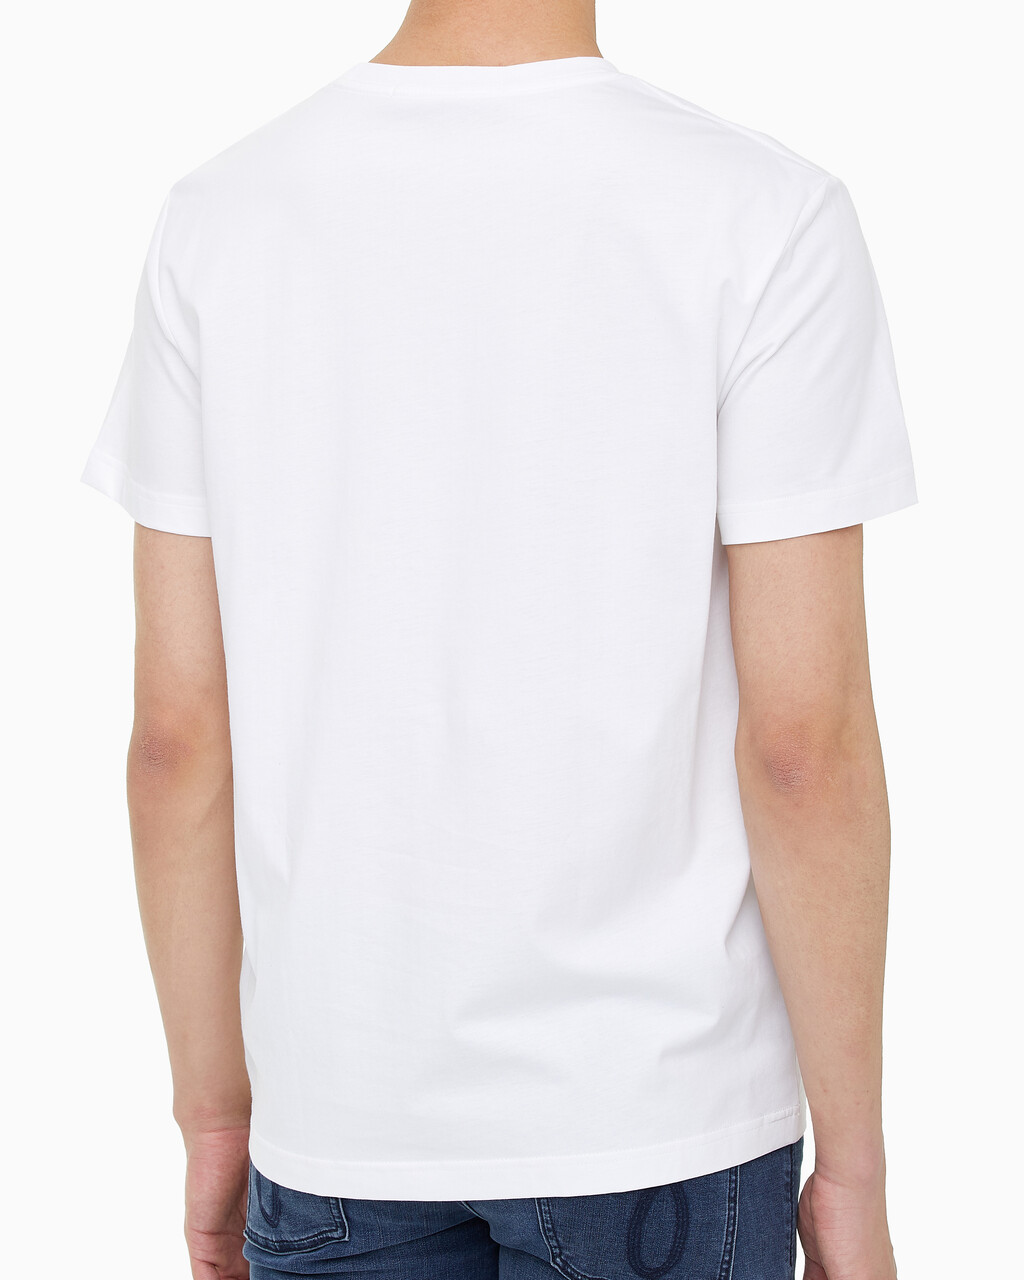 Buy 남성 레귤러핏 솔리드 CK 로고 반팔 티셔츠 in color BRIGHT WHITE